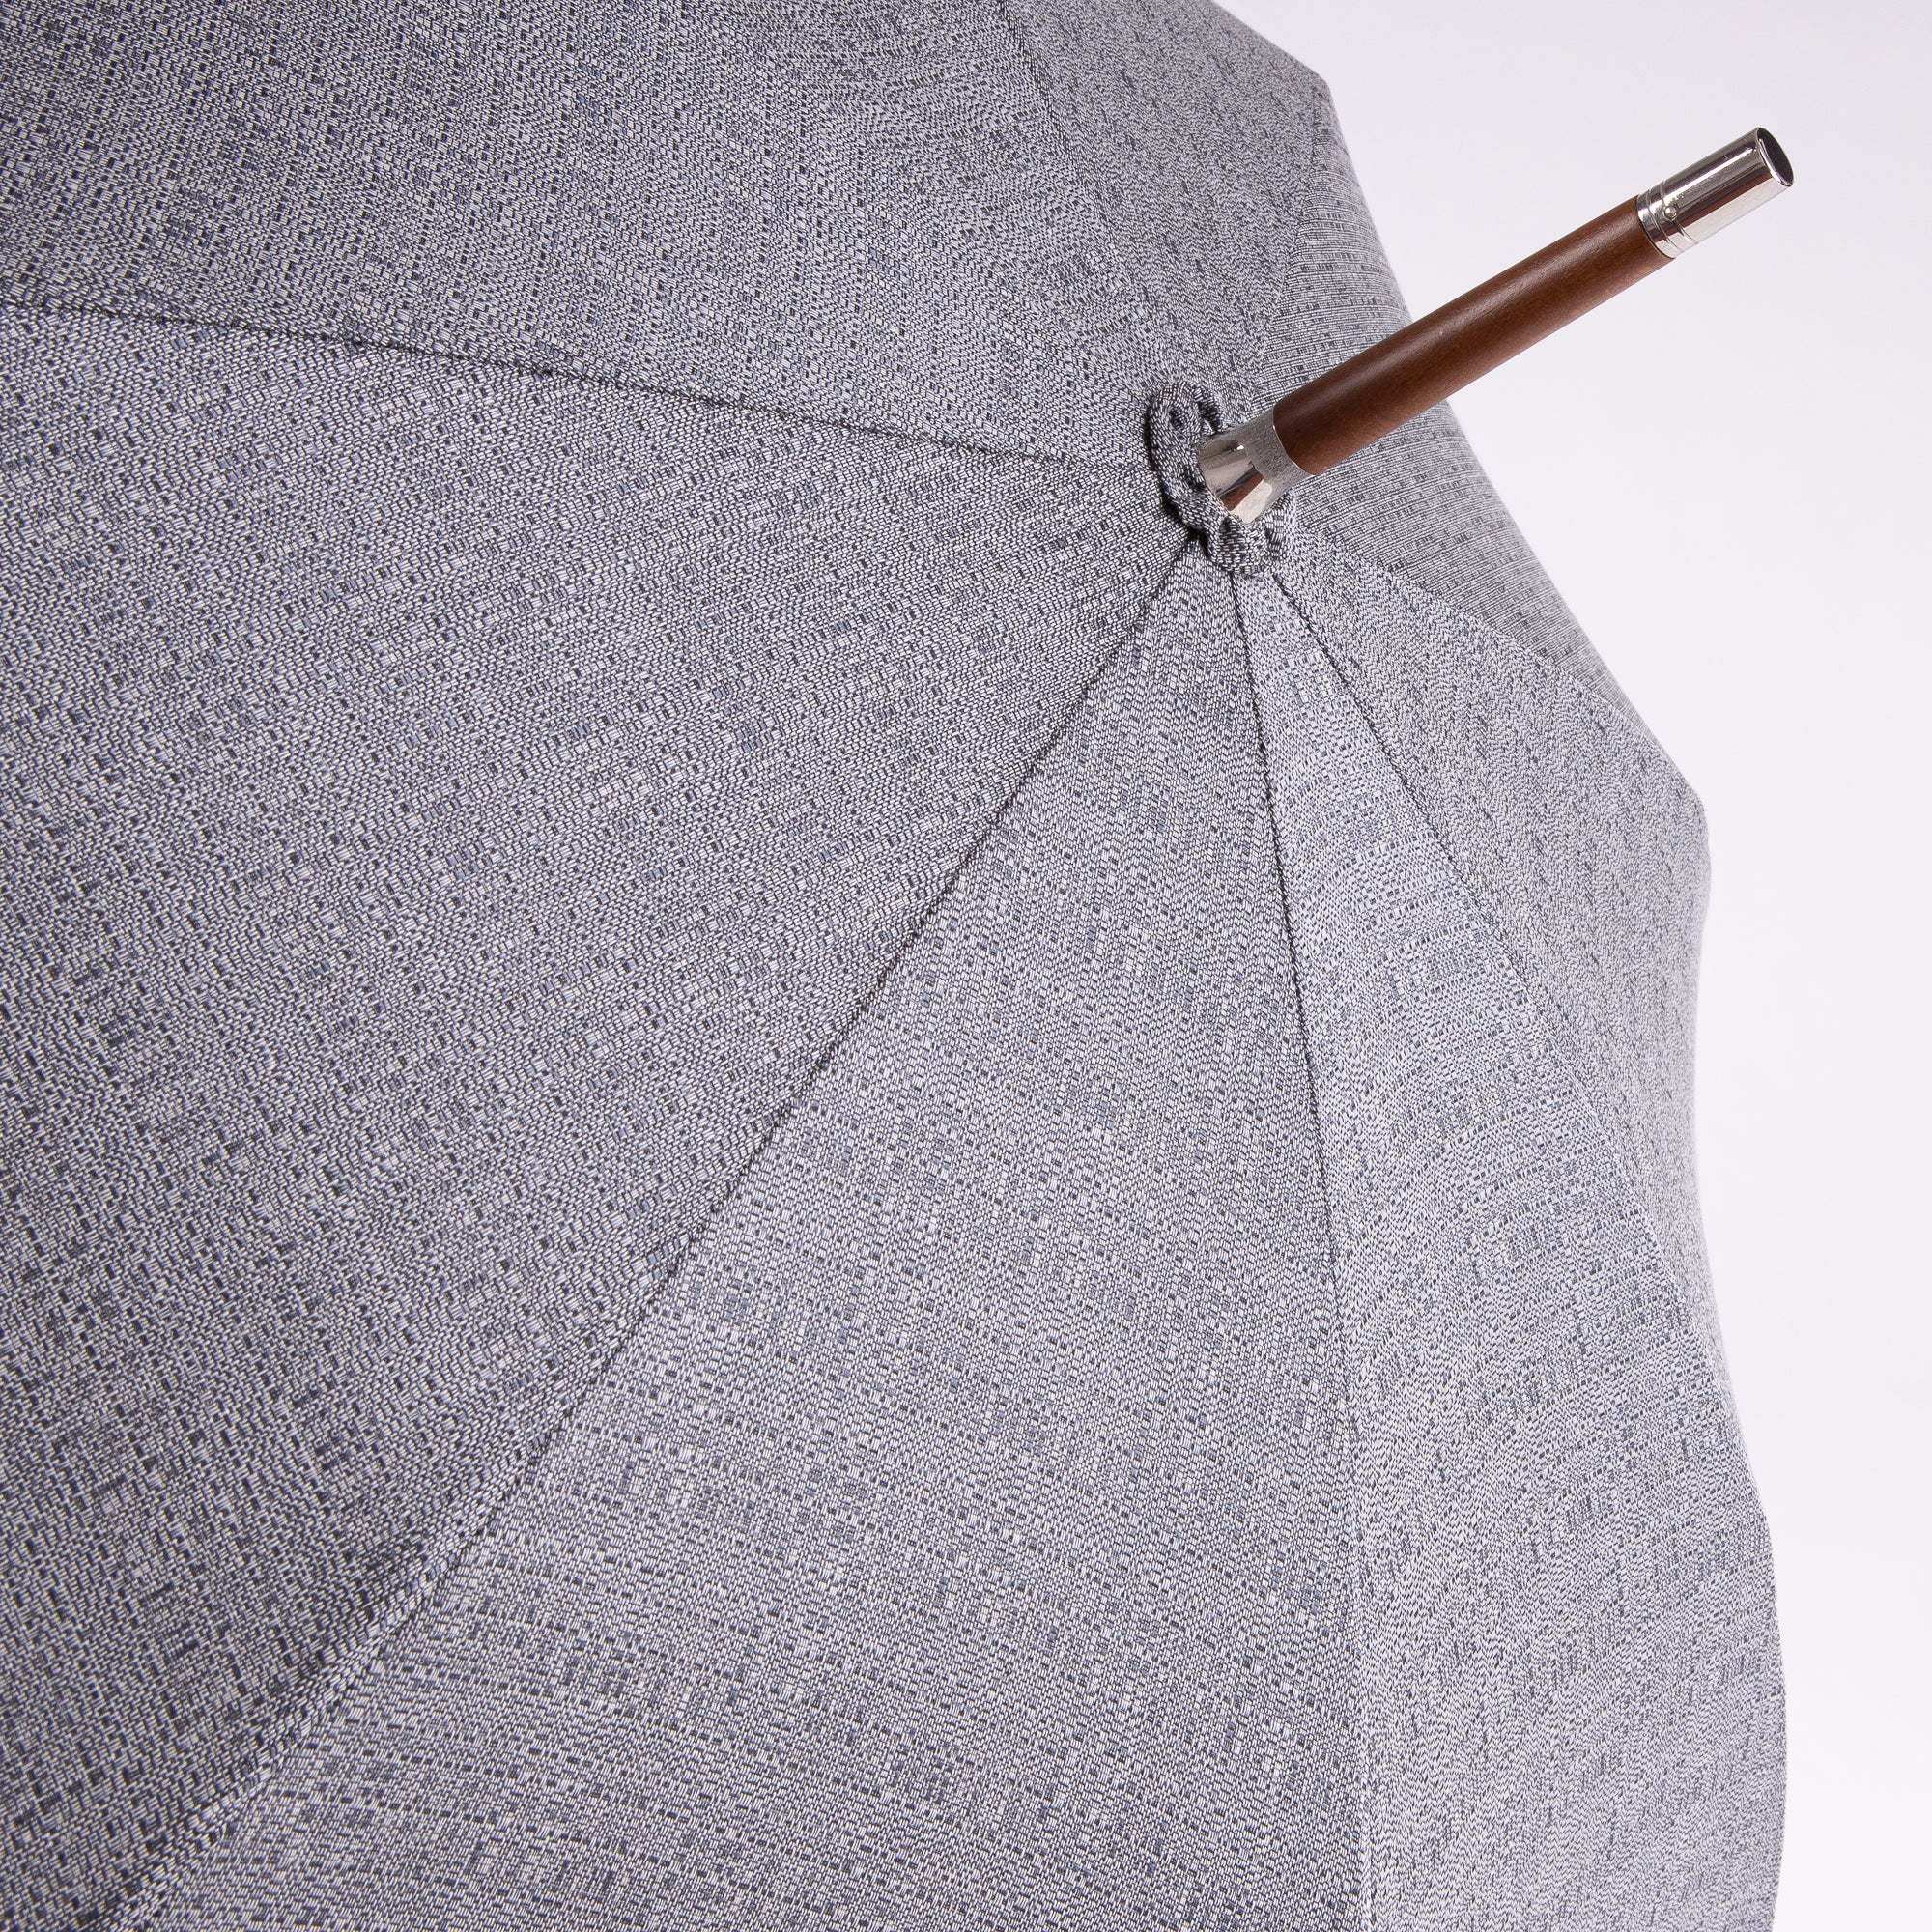 Ladies Umbrella with Bamboo Handle